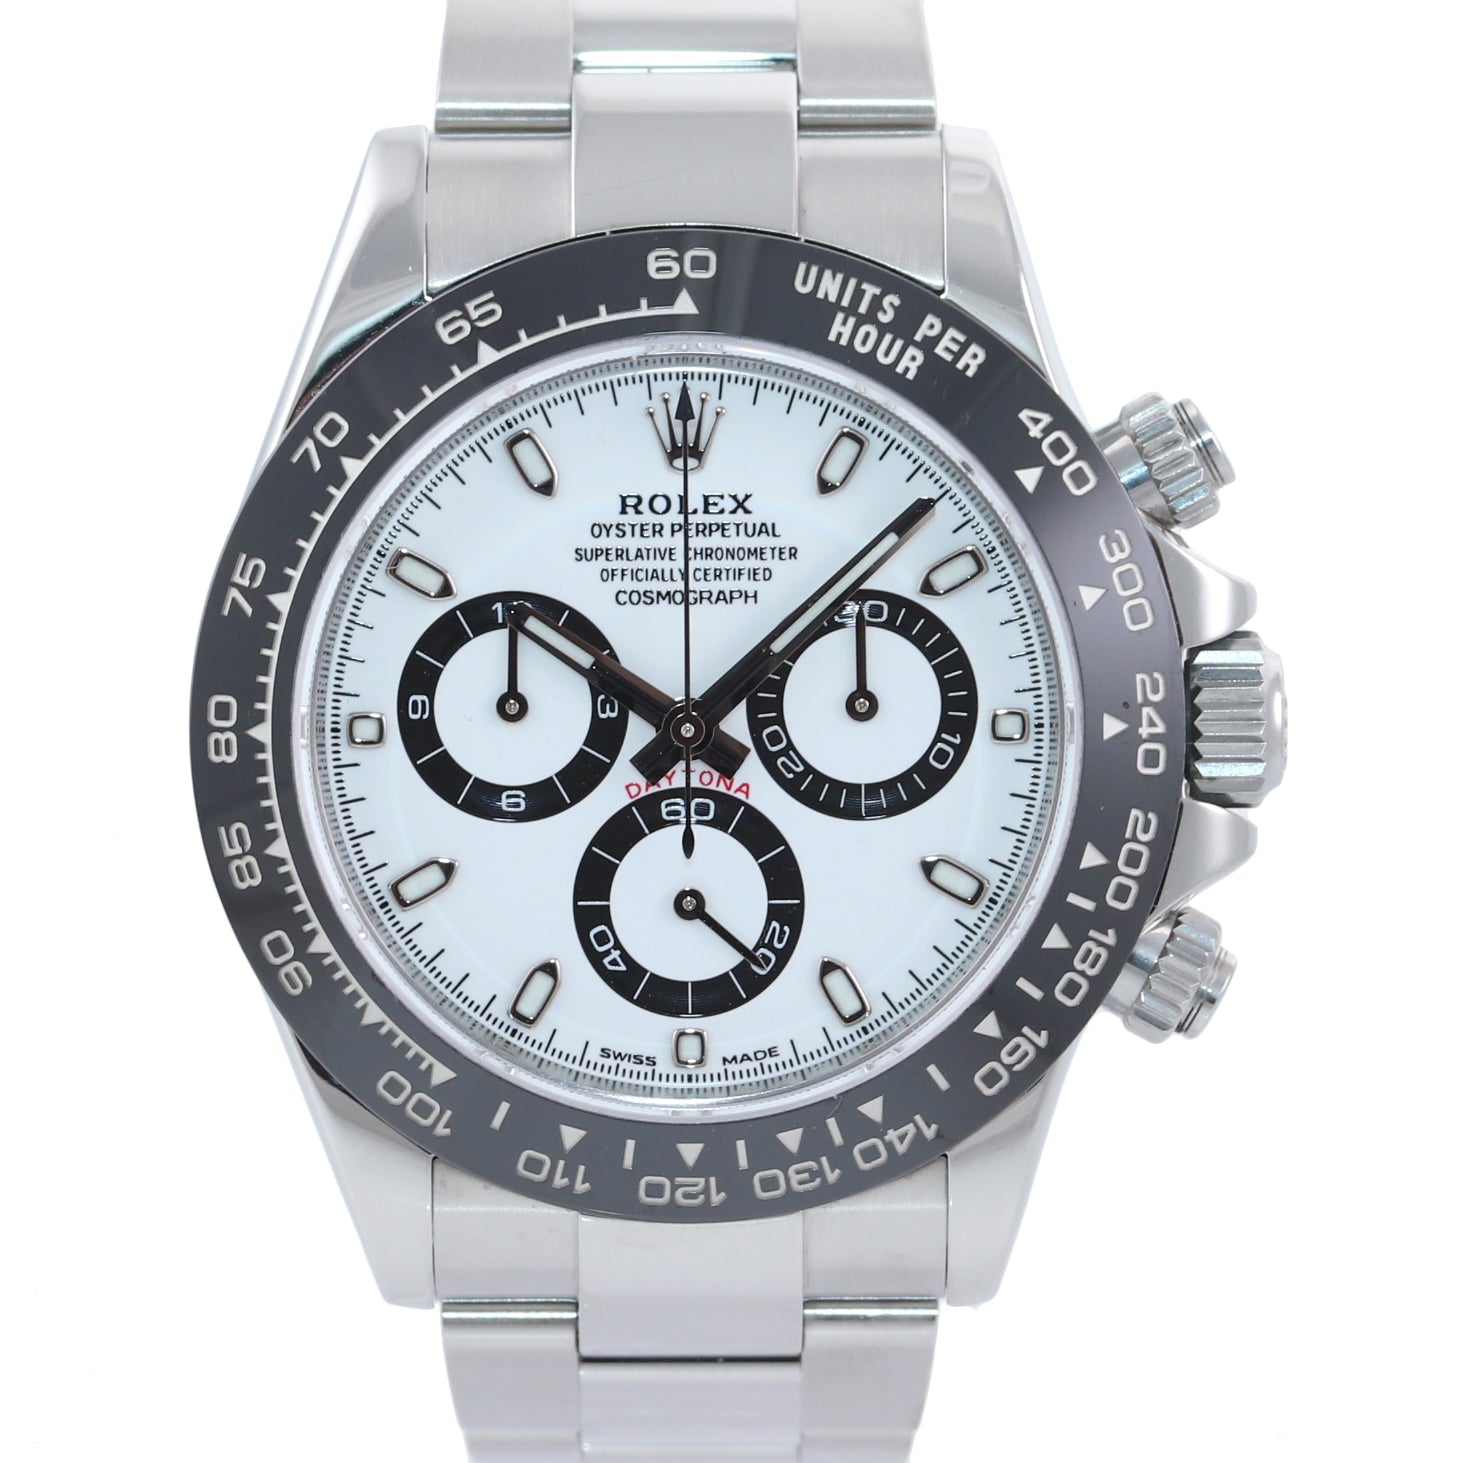 NEW 2019 PAPERS Rolex Daytona 116500LN White Ceramic Panda 40mm Steel Watch Box